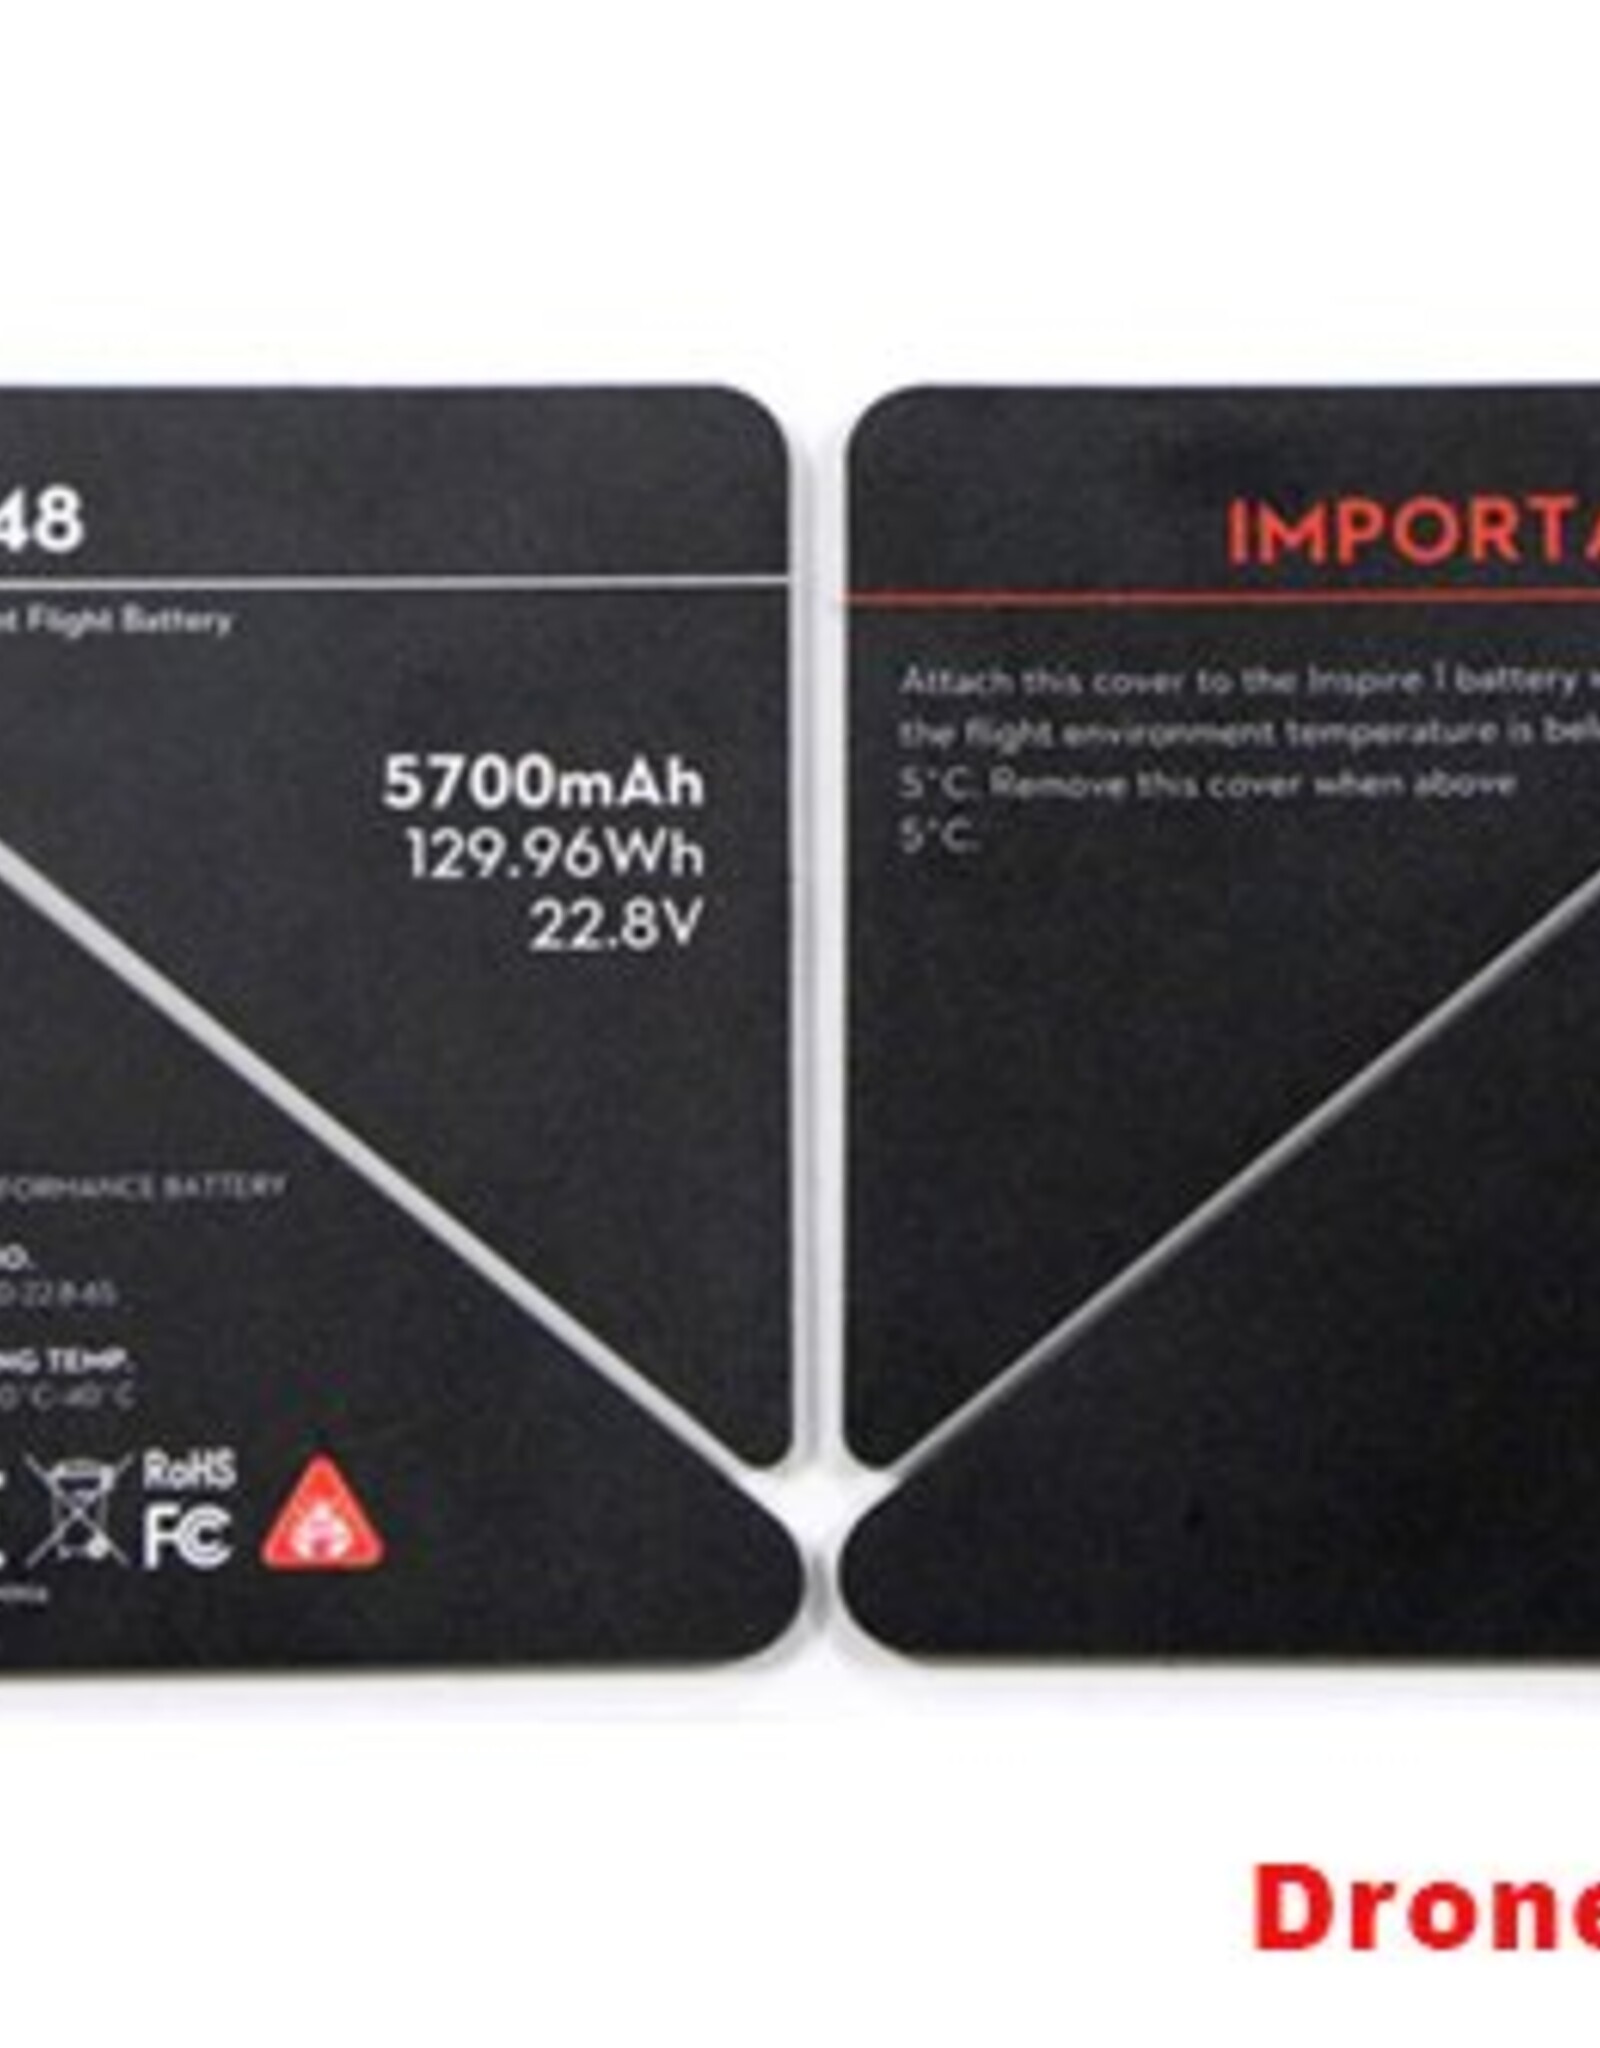 DJI DJI Inspire 1 TB48 Battery Insulation Sticker (Part 51)